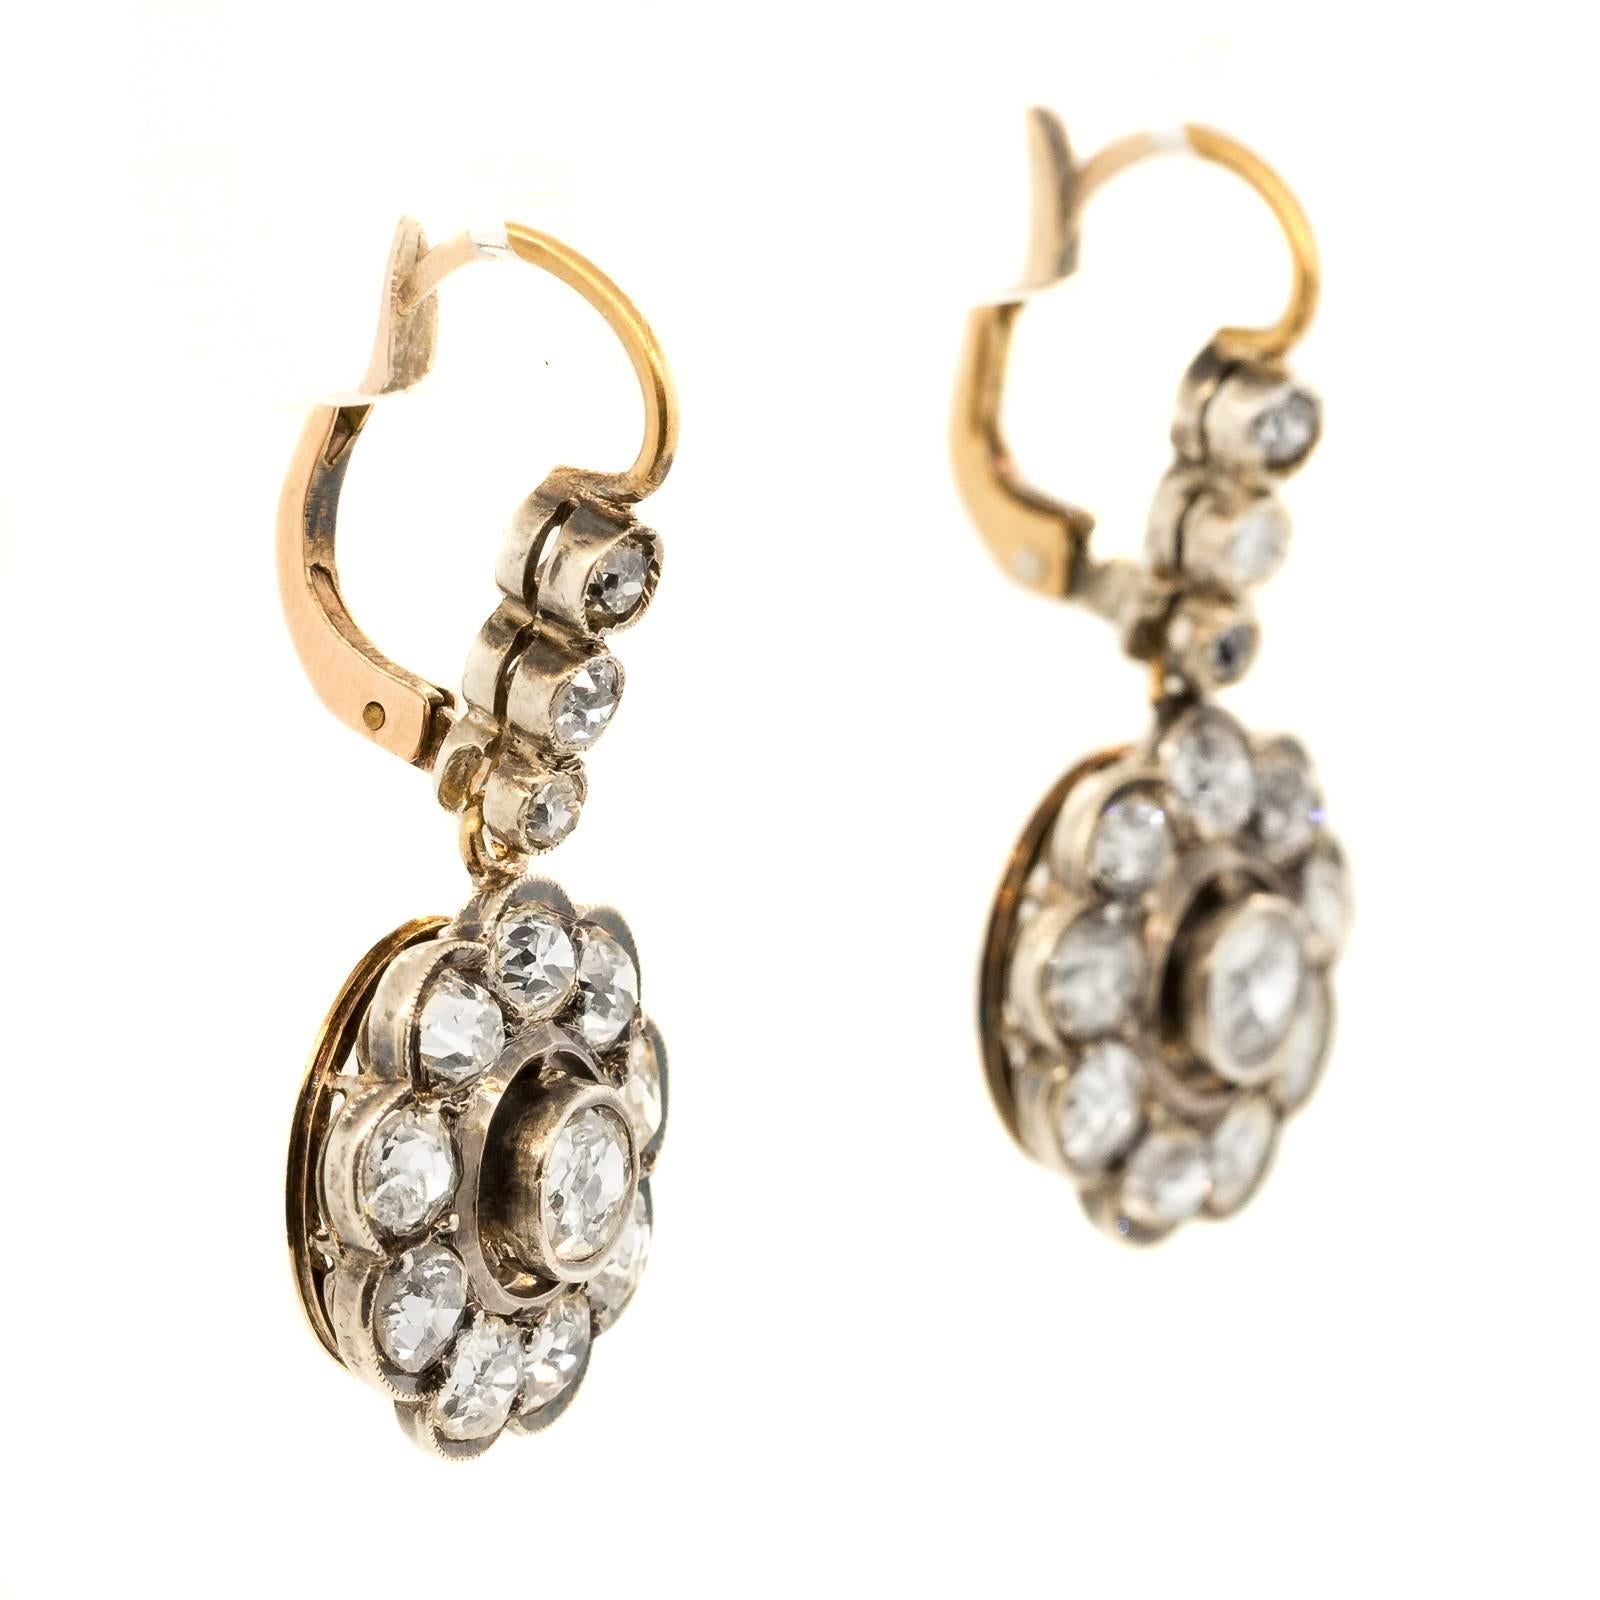 Romantic 1910 Antique Old Cut Diamond Cluster Earrings